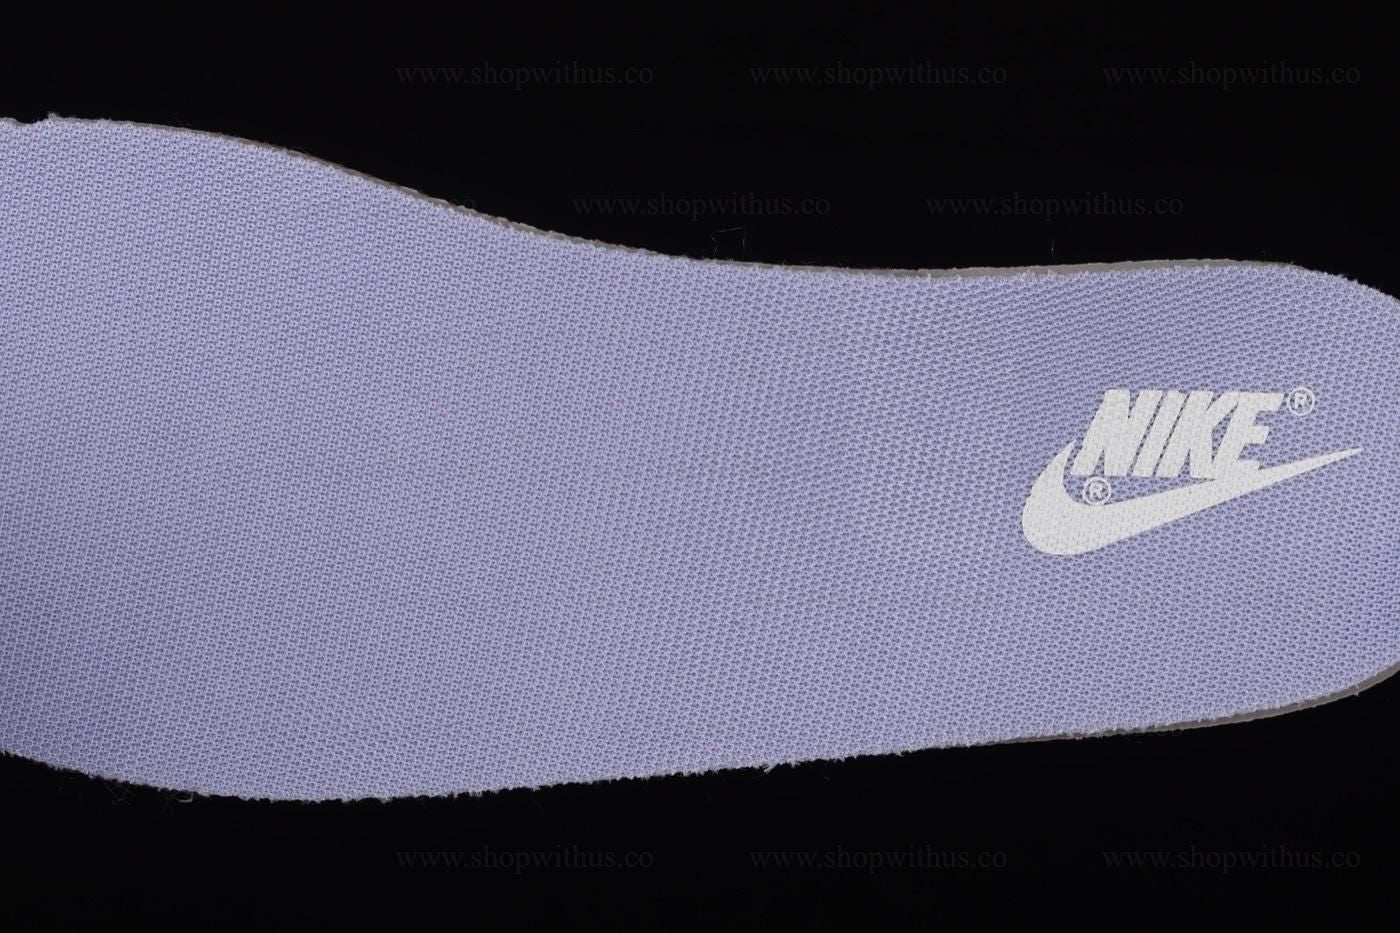 NikeWMNS Dunk Low OG - Purple Pulse